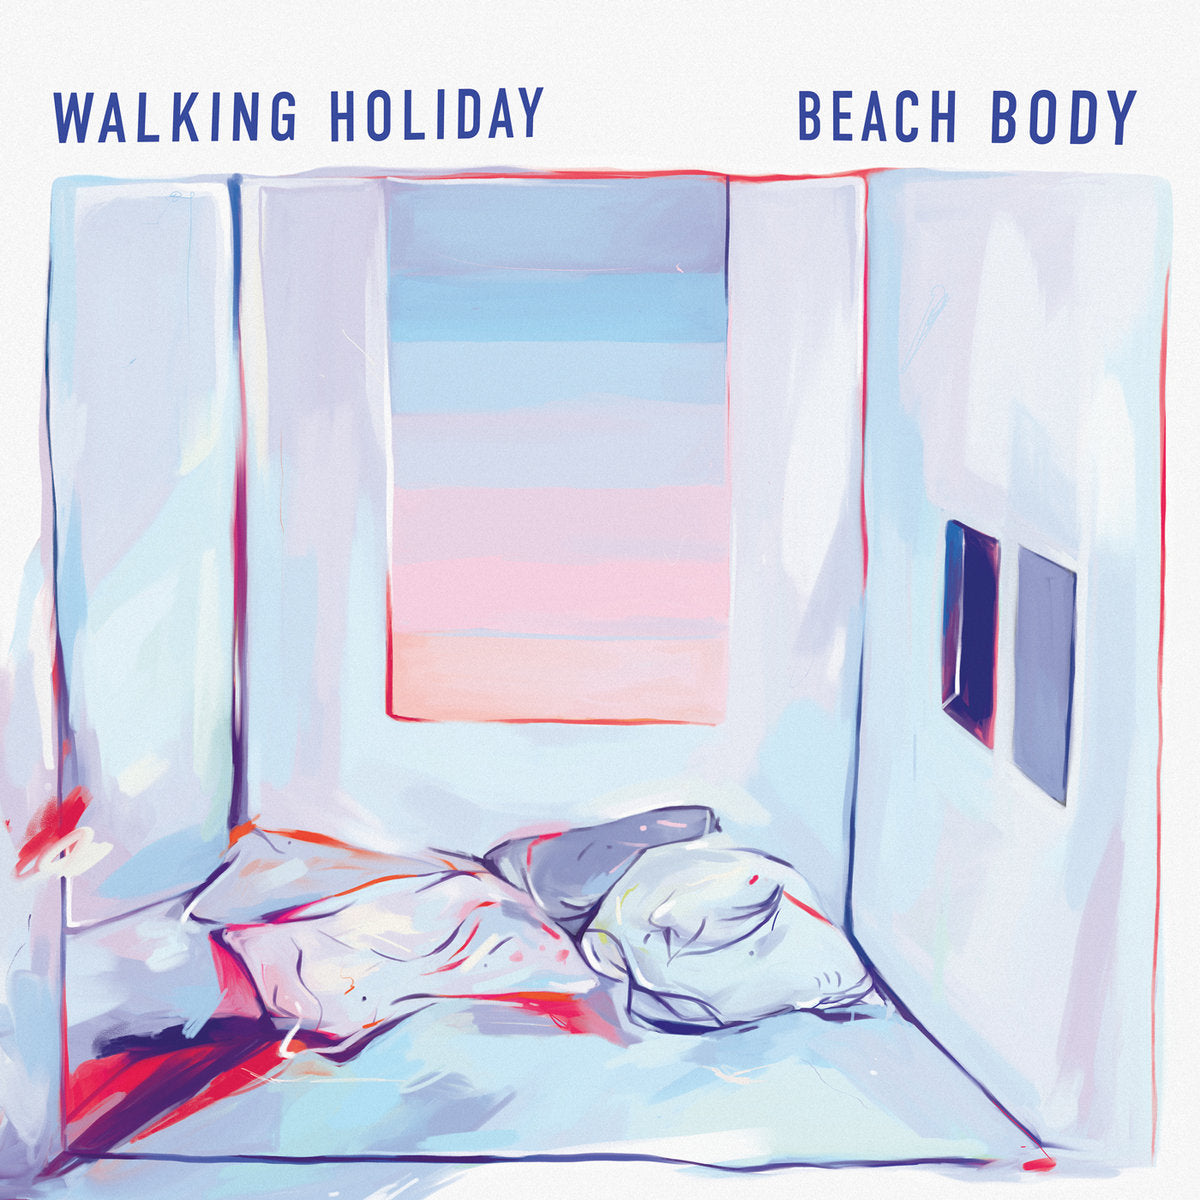 BEACH BODY 'WALKING HOLIDAY'